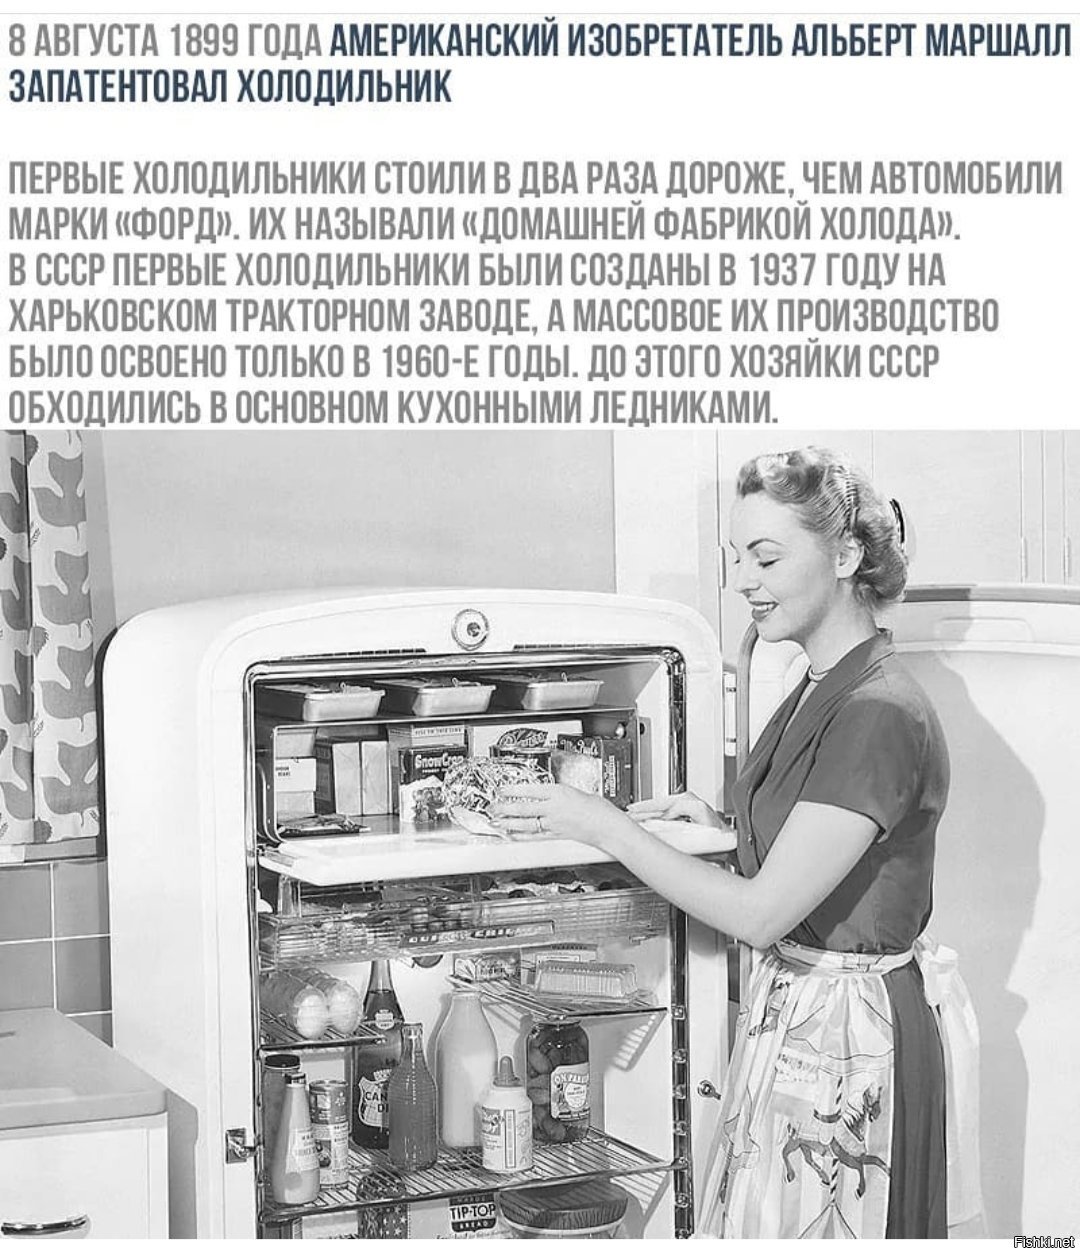 Когда изобрели 1 холодильник. Первый холодильник. Холодильник 1899.